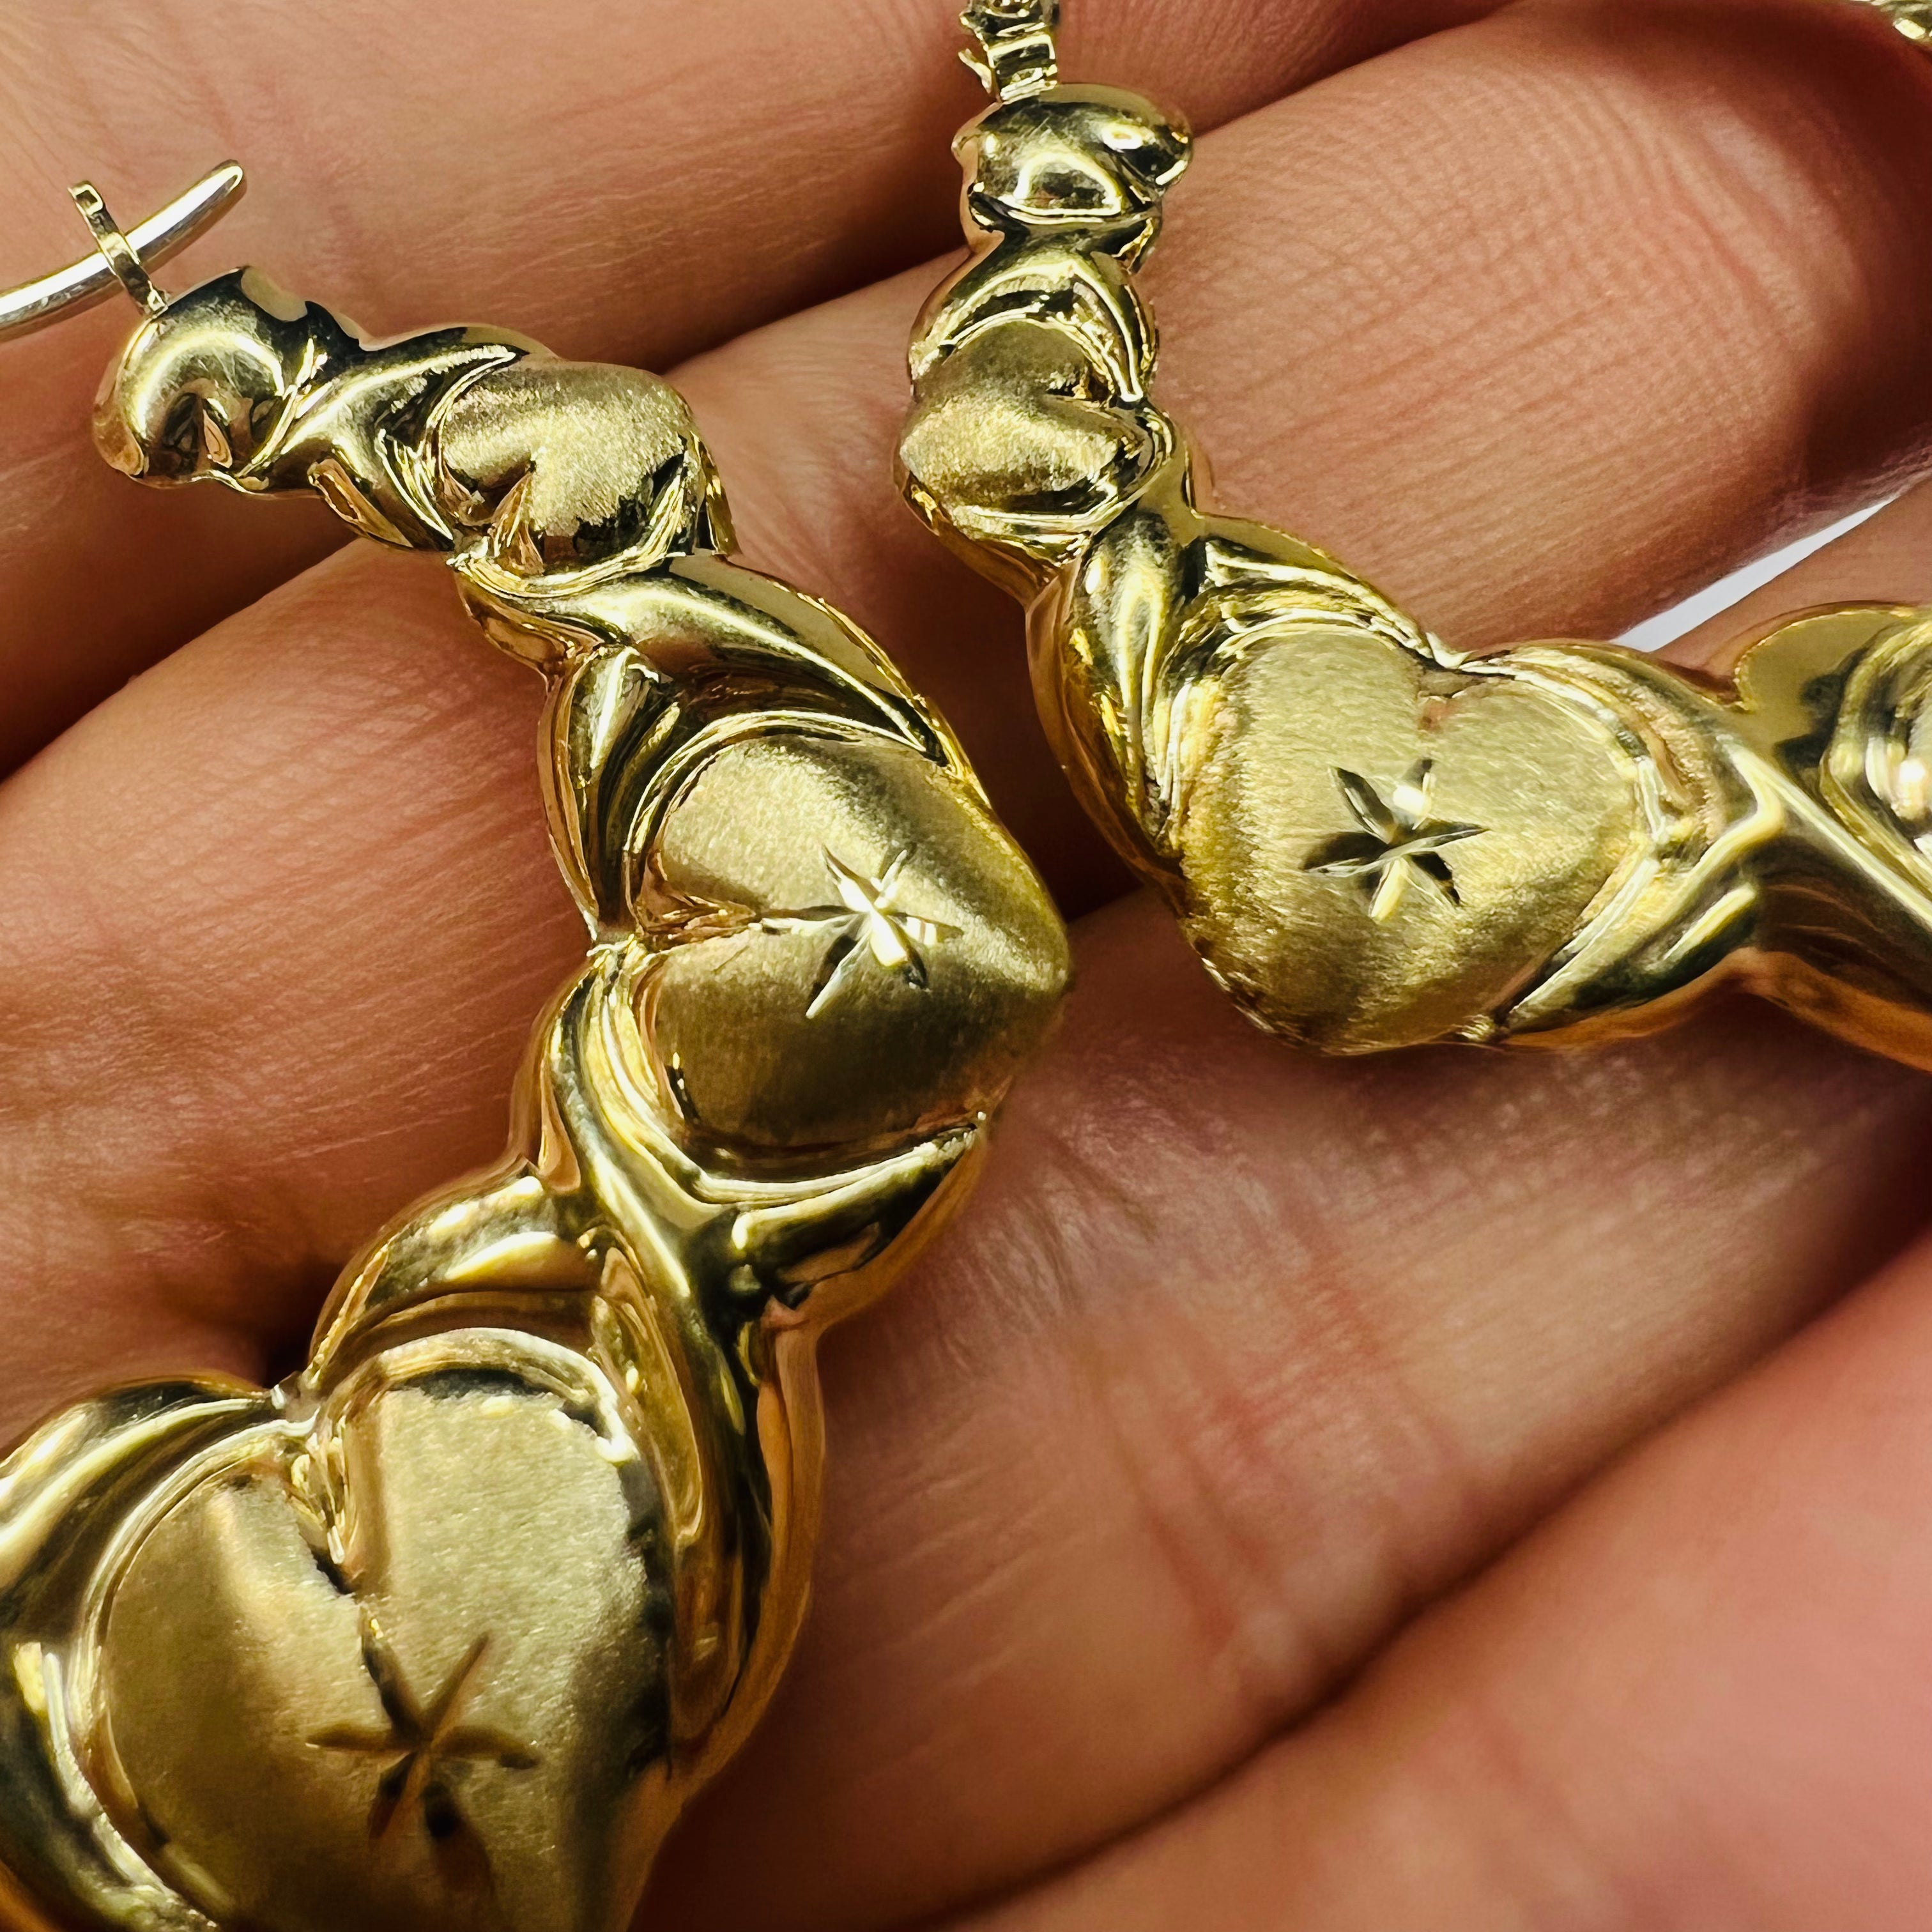 New 10K Solid Yellow Gold Heart Patterned Hoop Earrings 1.75"x1.5"